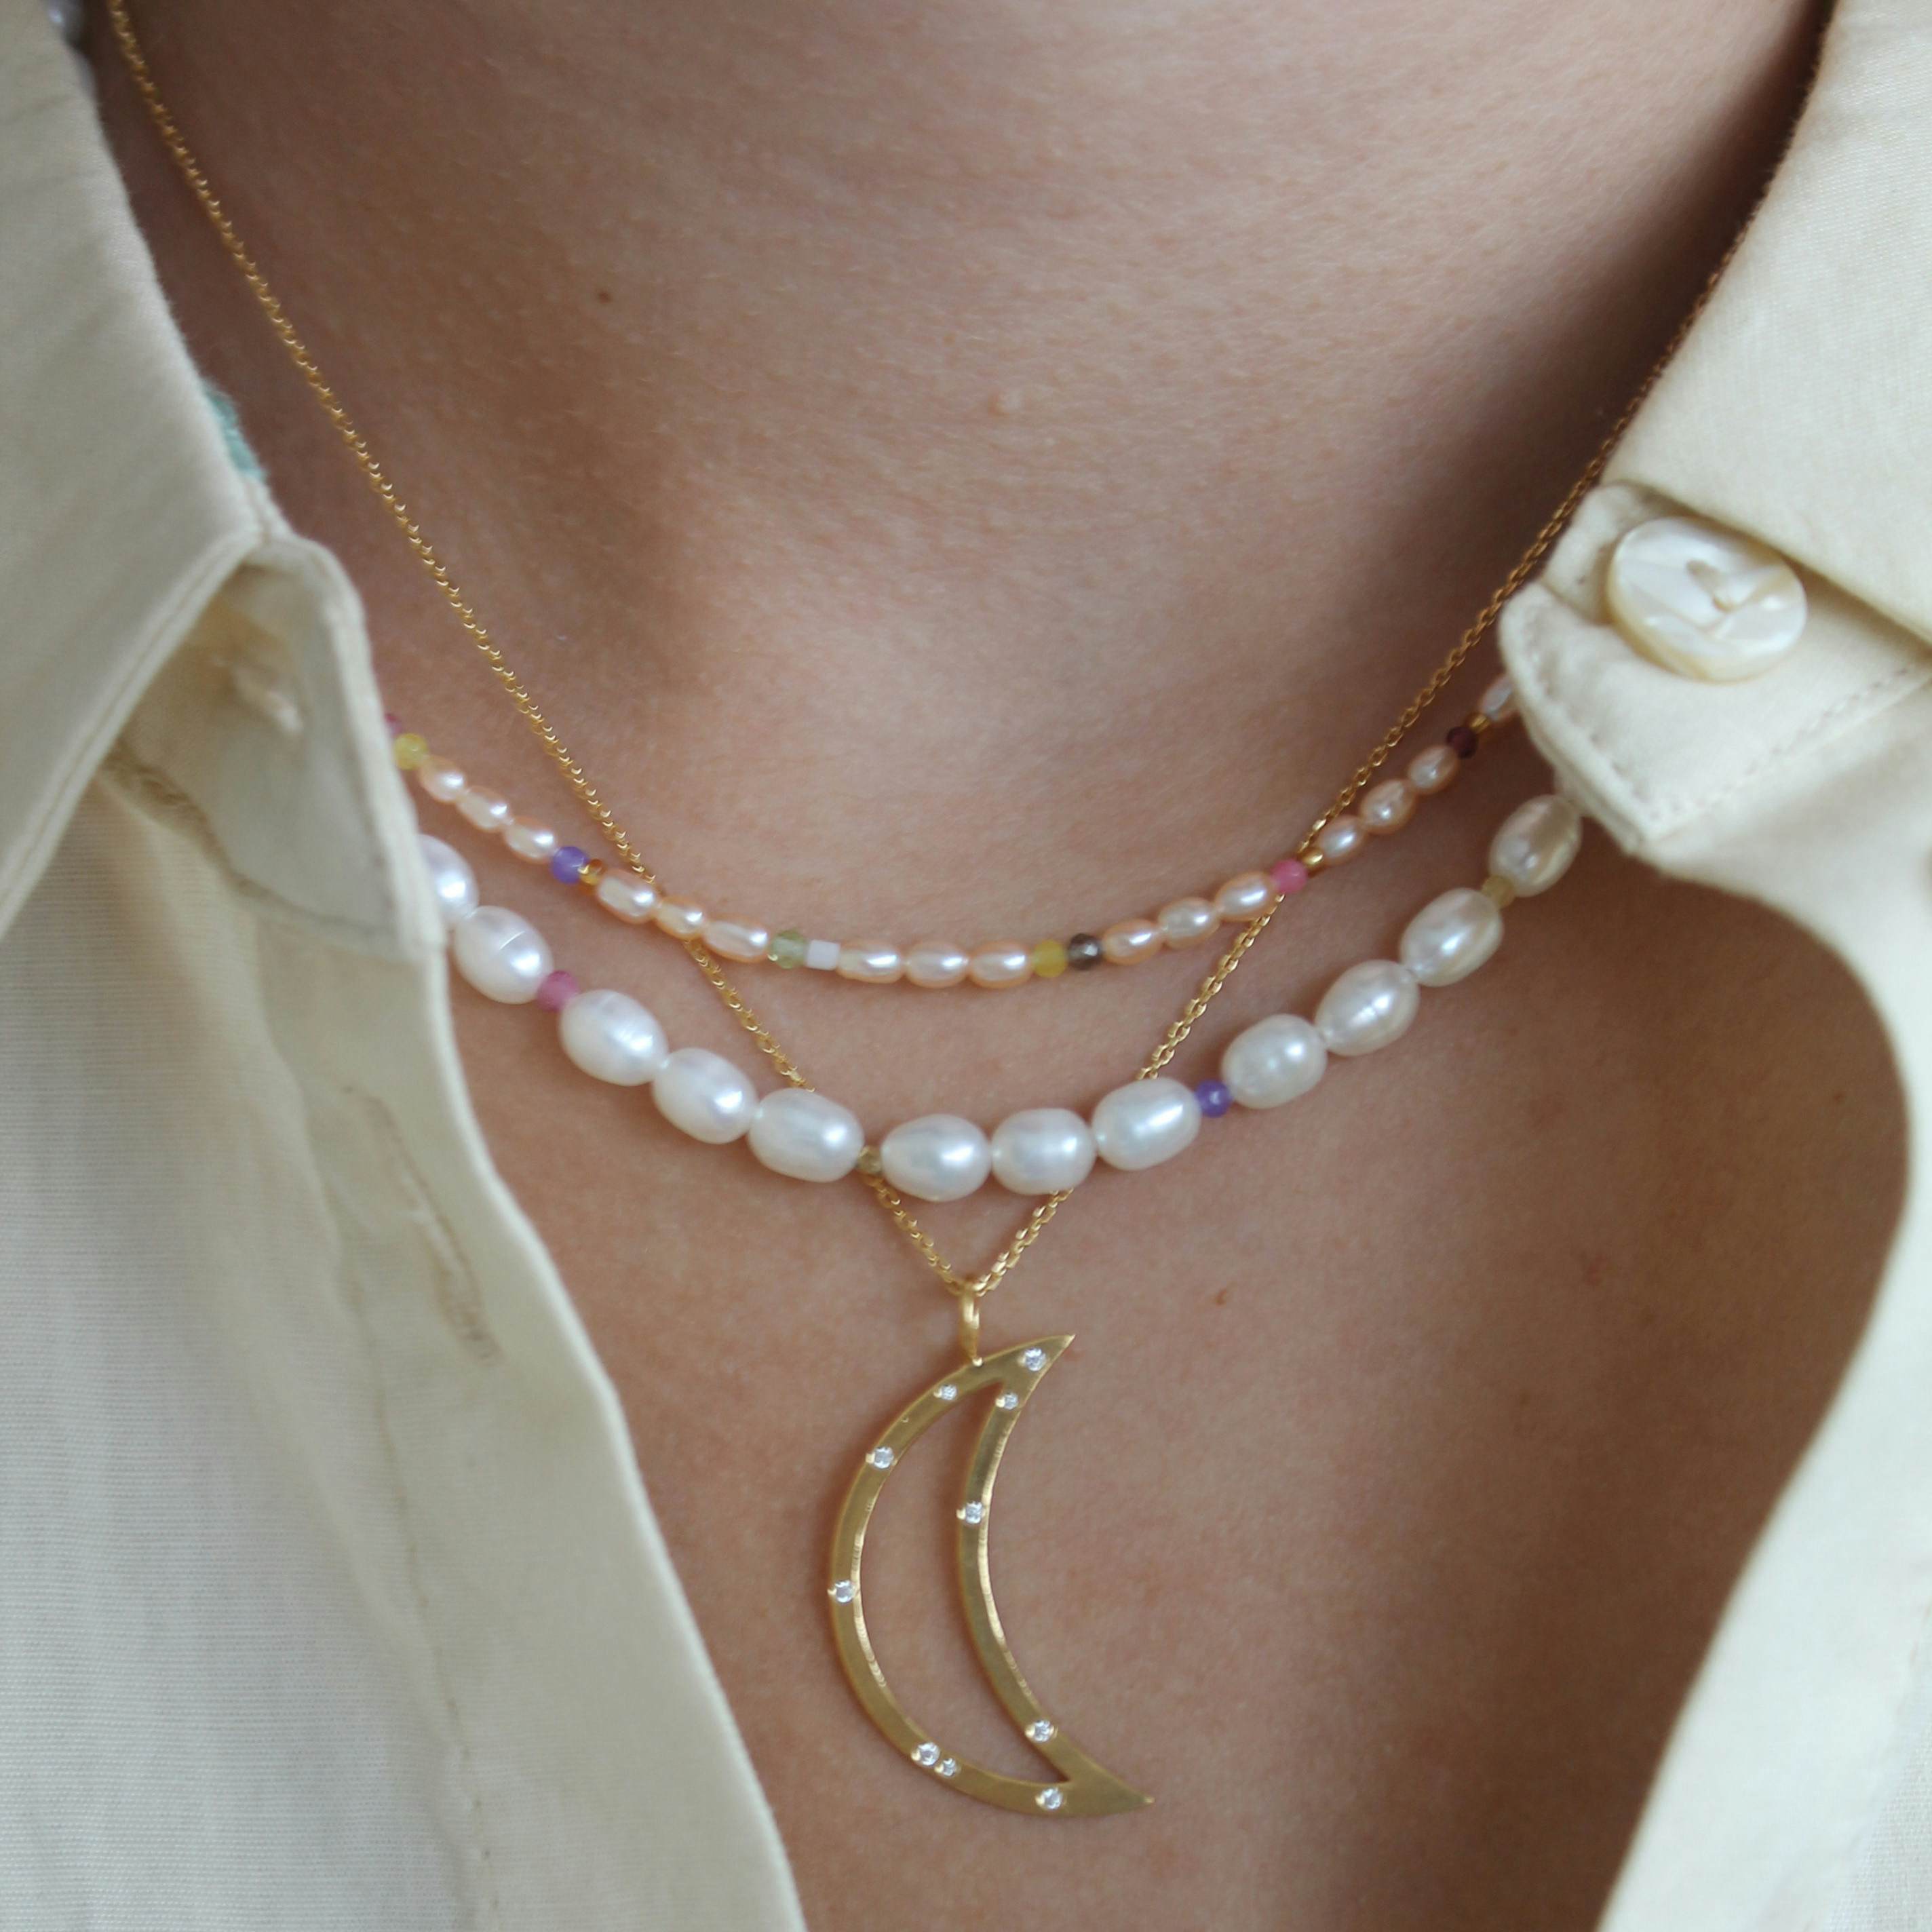 Bella Moon With Stones Pendant von STINE A Jewelry in Vergoldet-Silber Sterling 925|